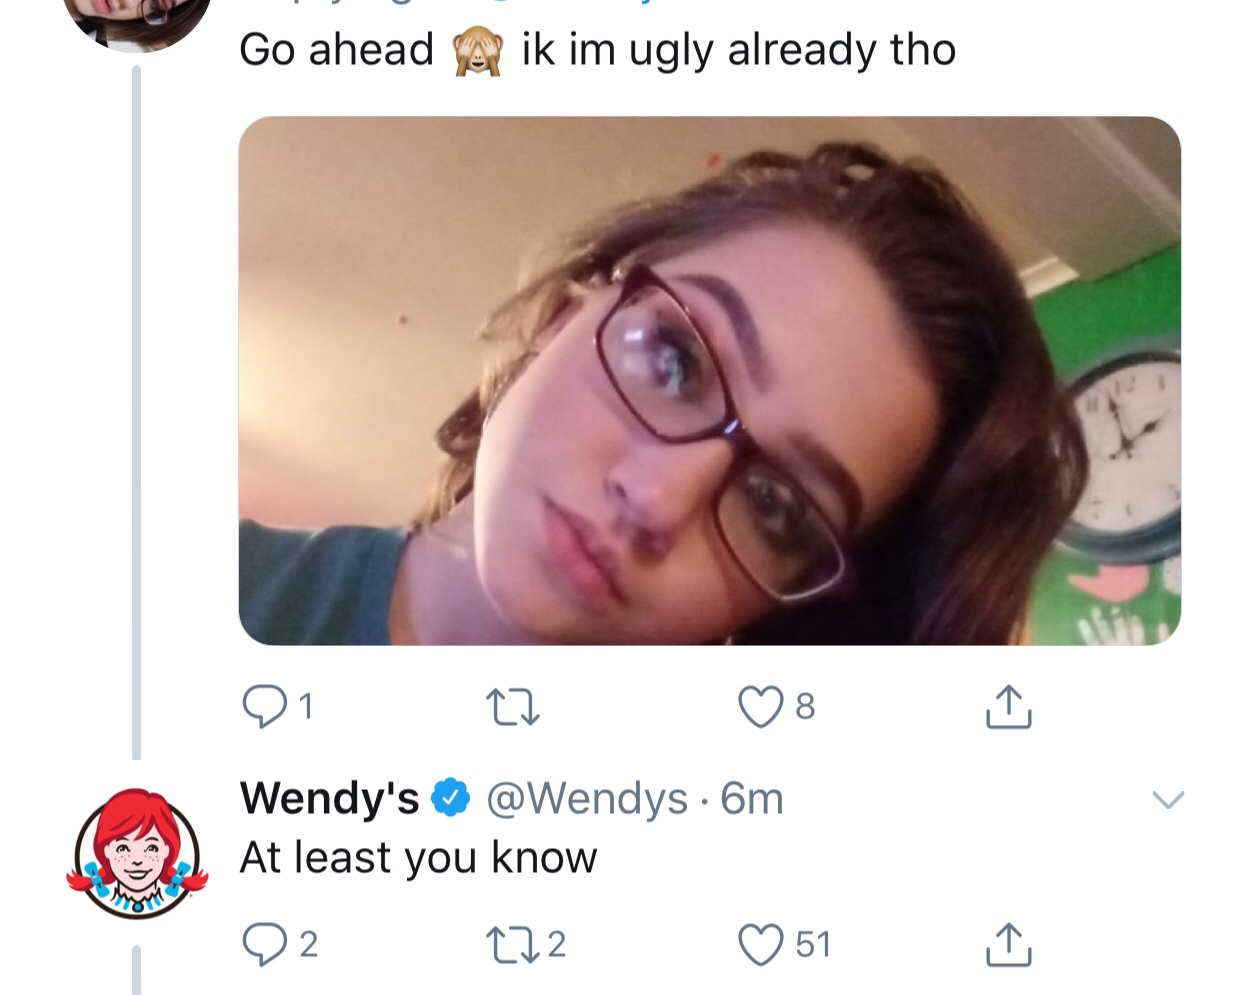 tweet - wendy's company - Go ahead A ik im ugly already tho O co oo o Wendy's ~ 6m At least you know 22 222 051